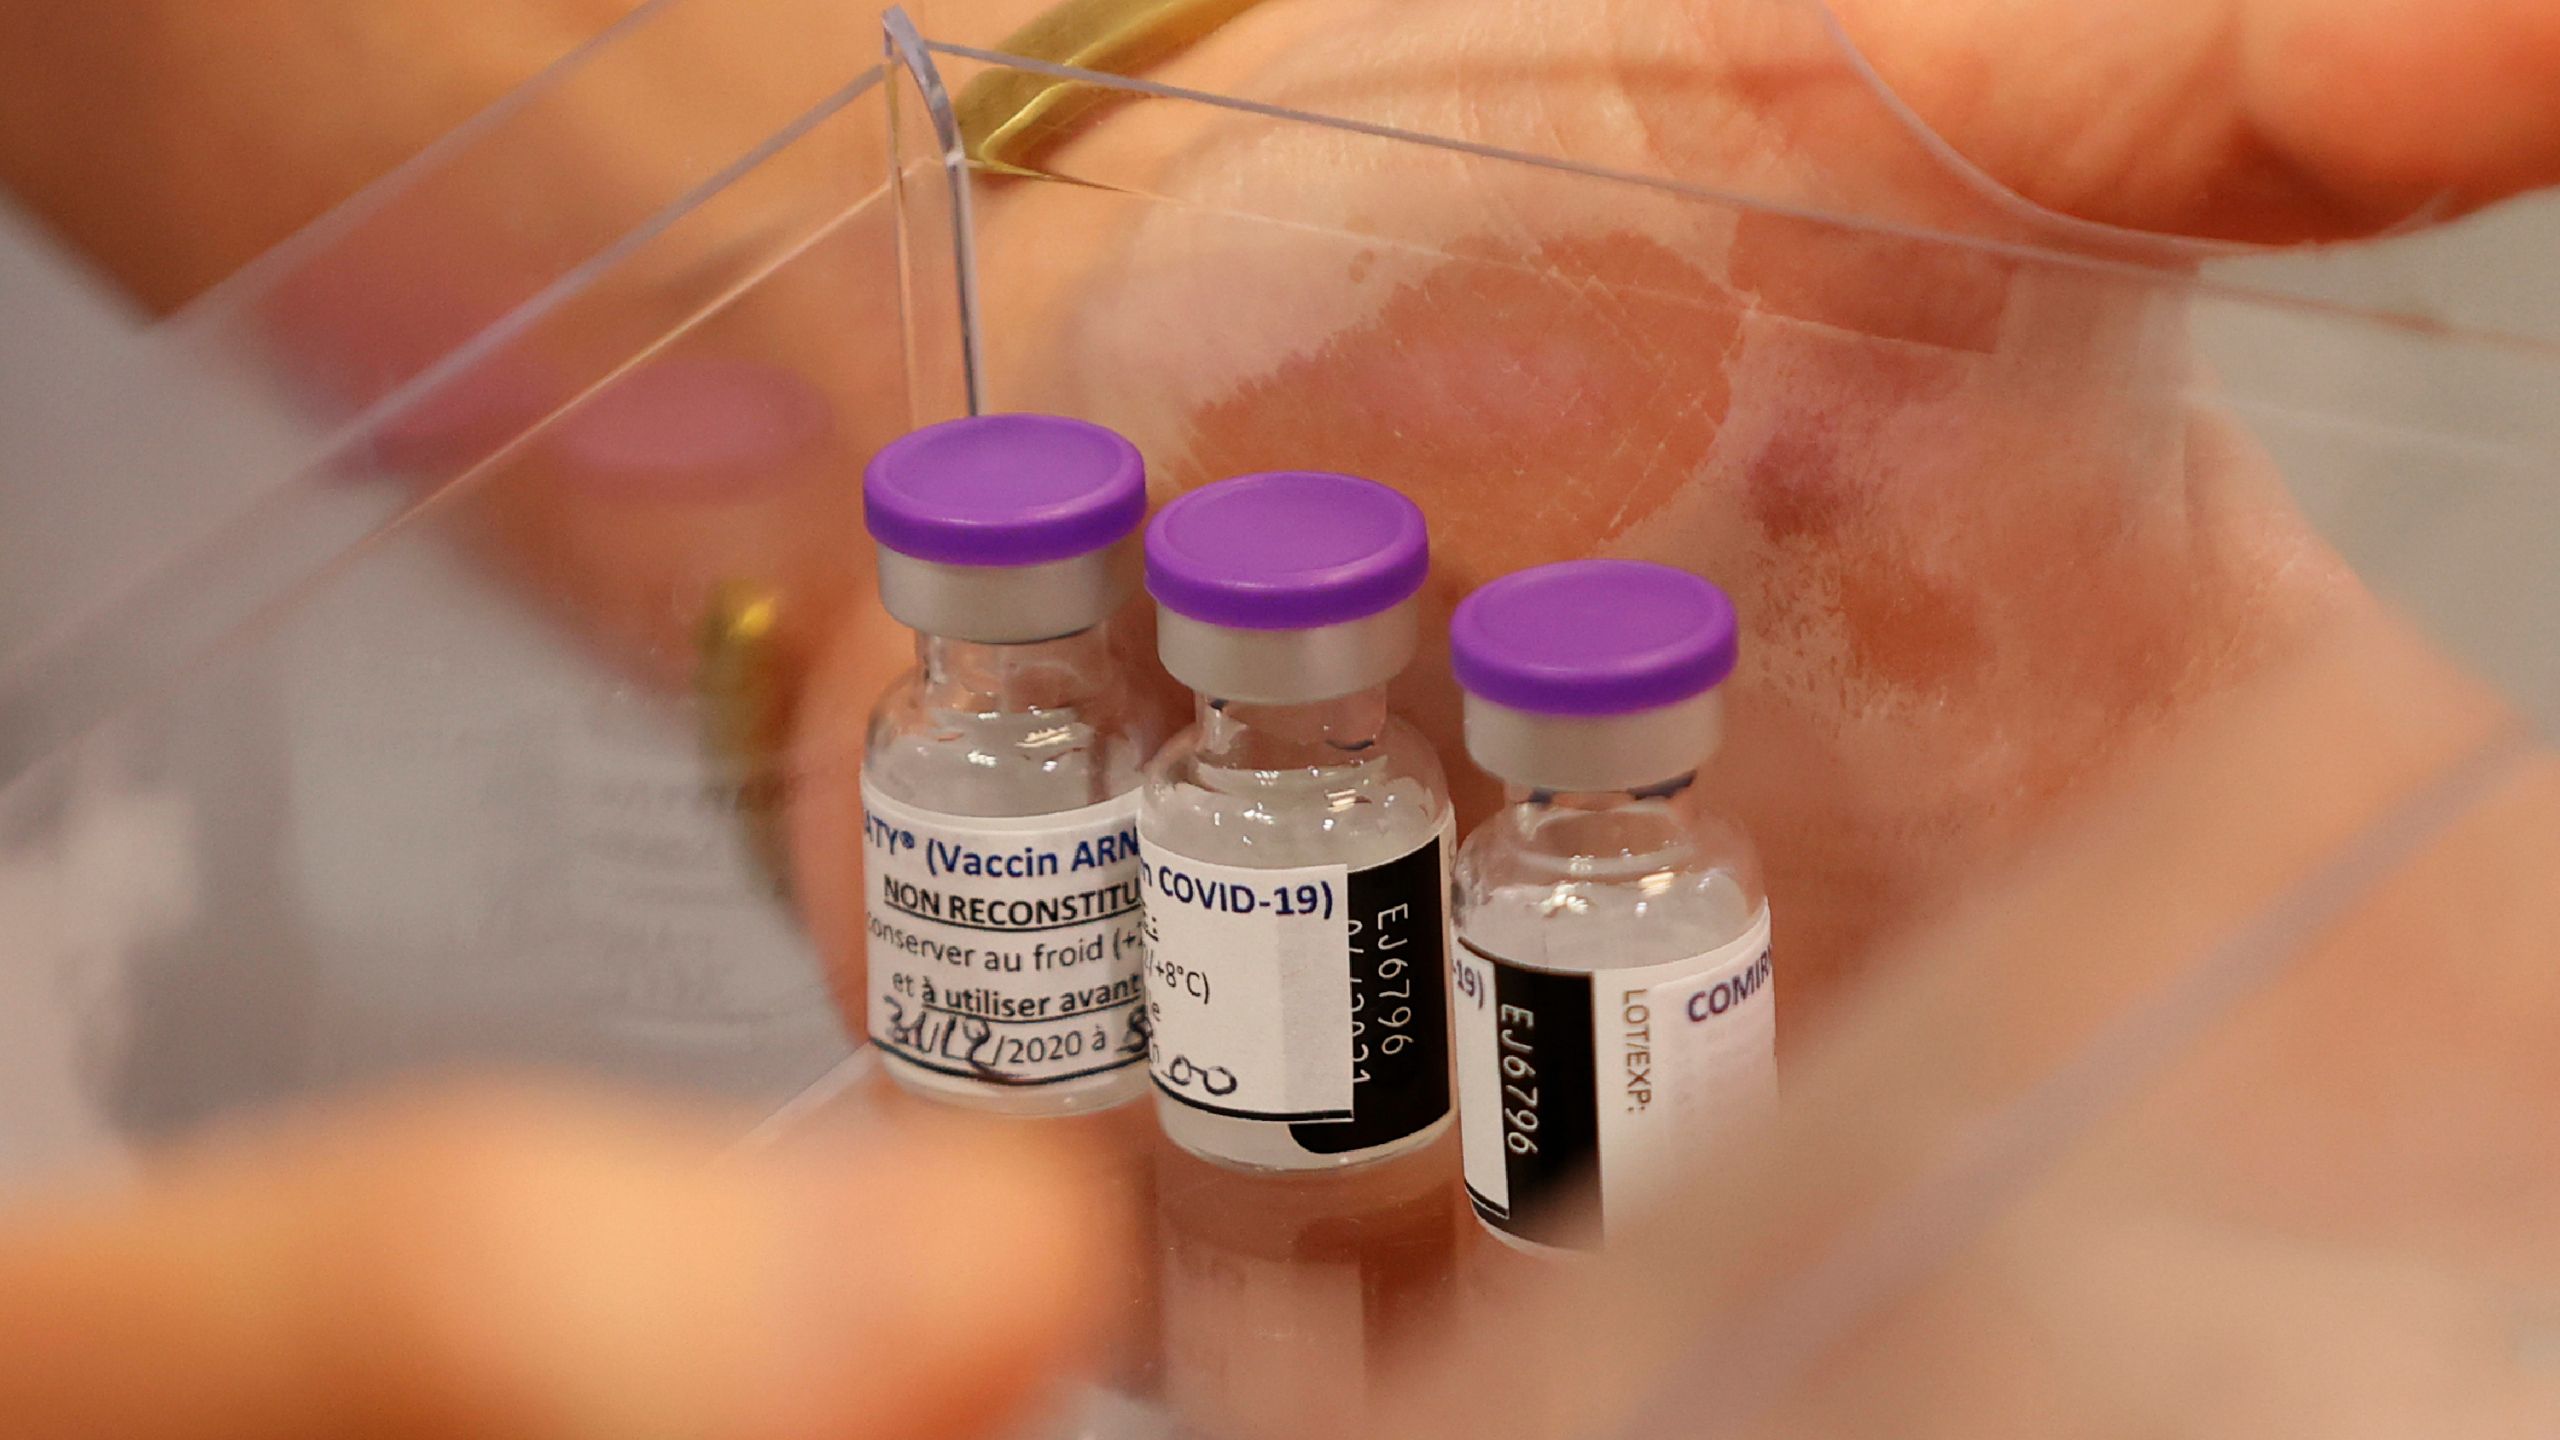 New study suggests Pfizer vaccine works against mutation found in 2 coronavirus variants